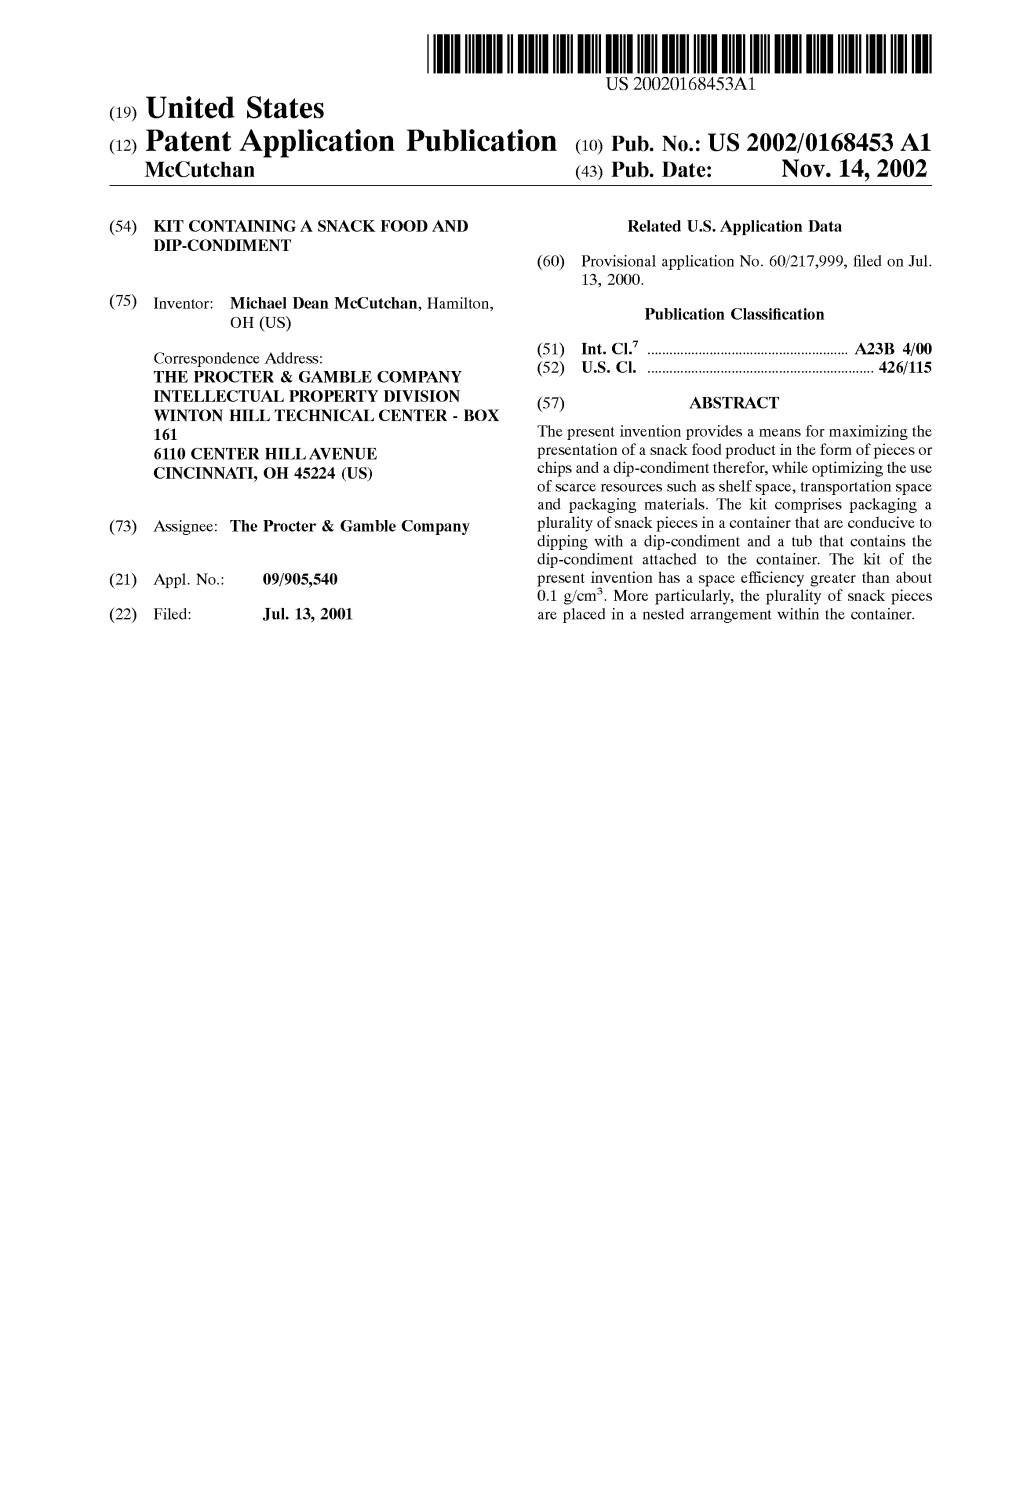 (12) Patent Application Publication (10) Pub. No.: US 2002/0168453 A1 Mccutchan (43) Pub